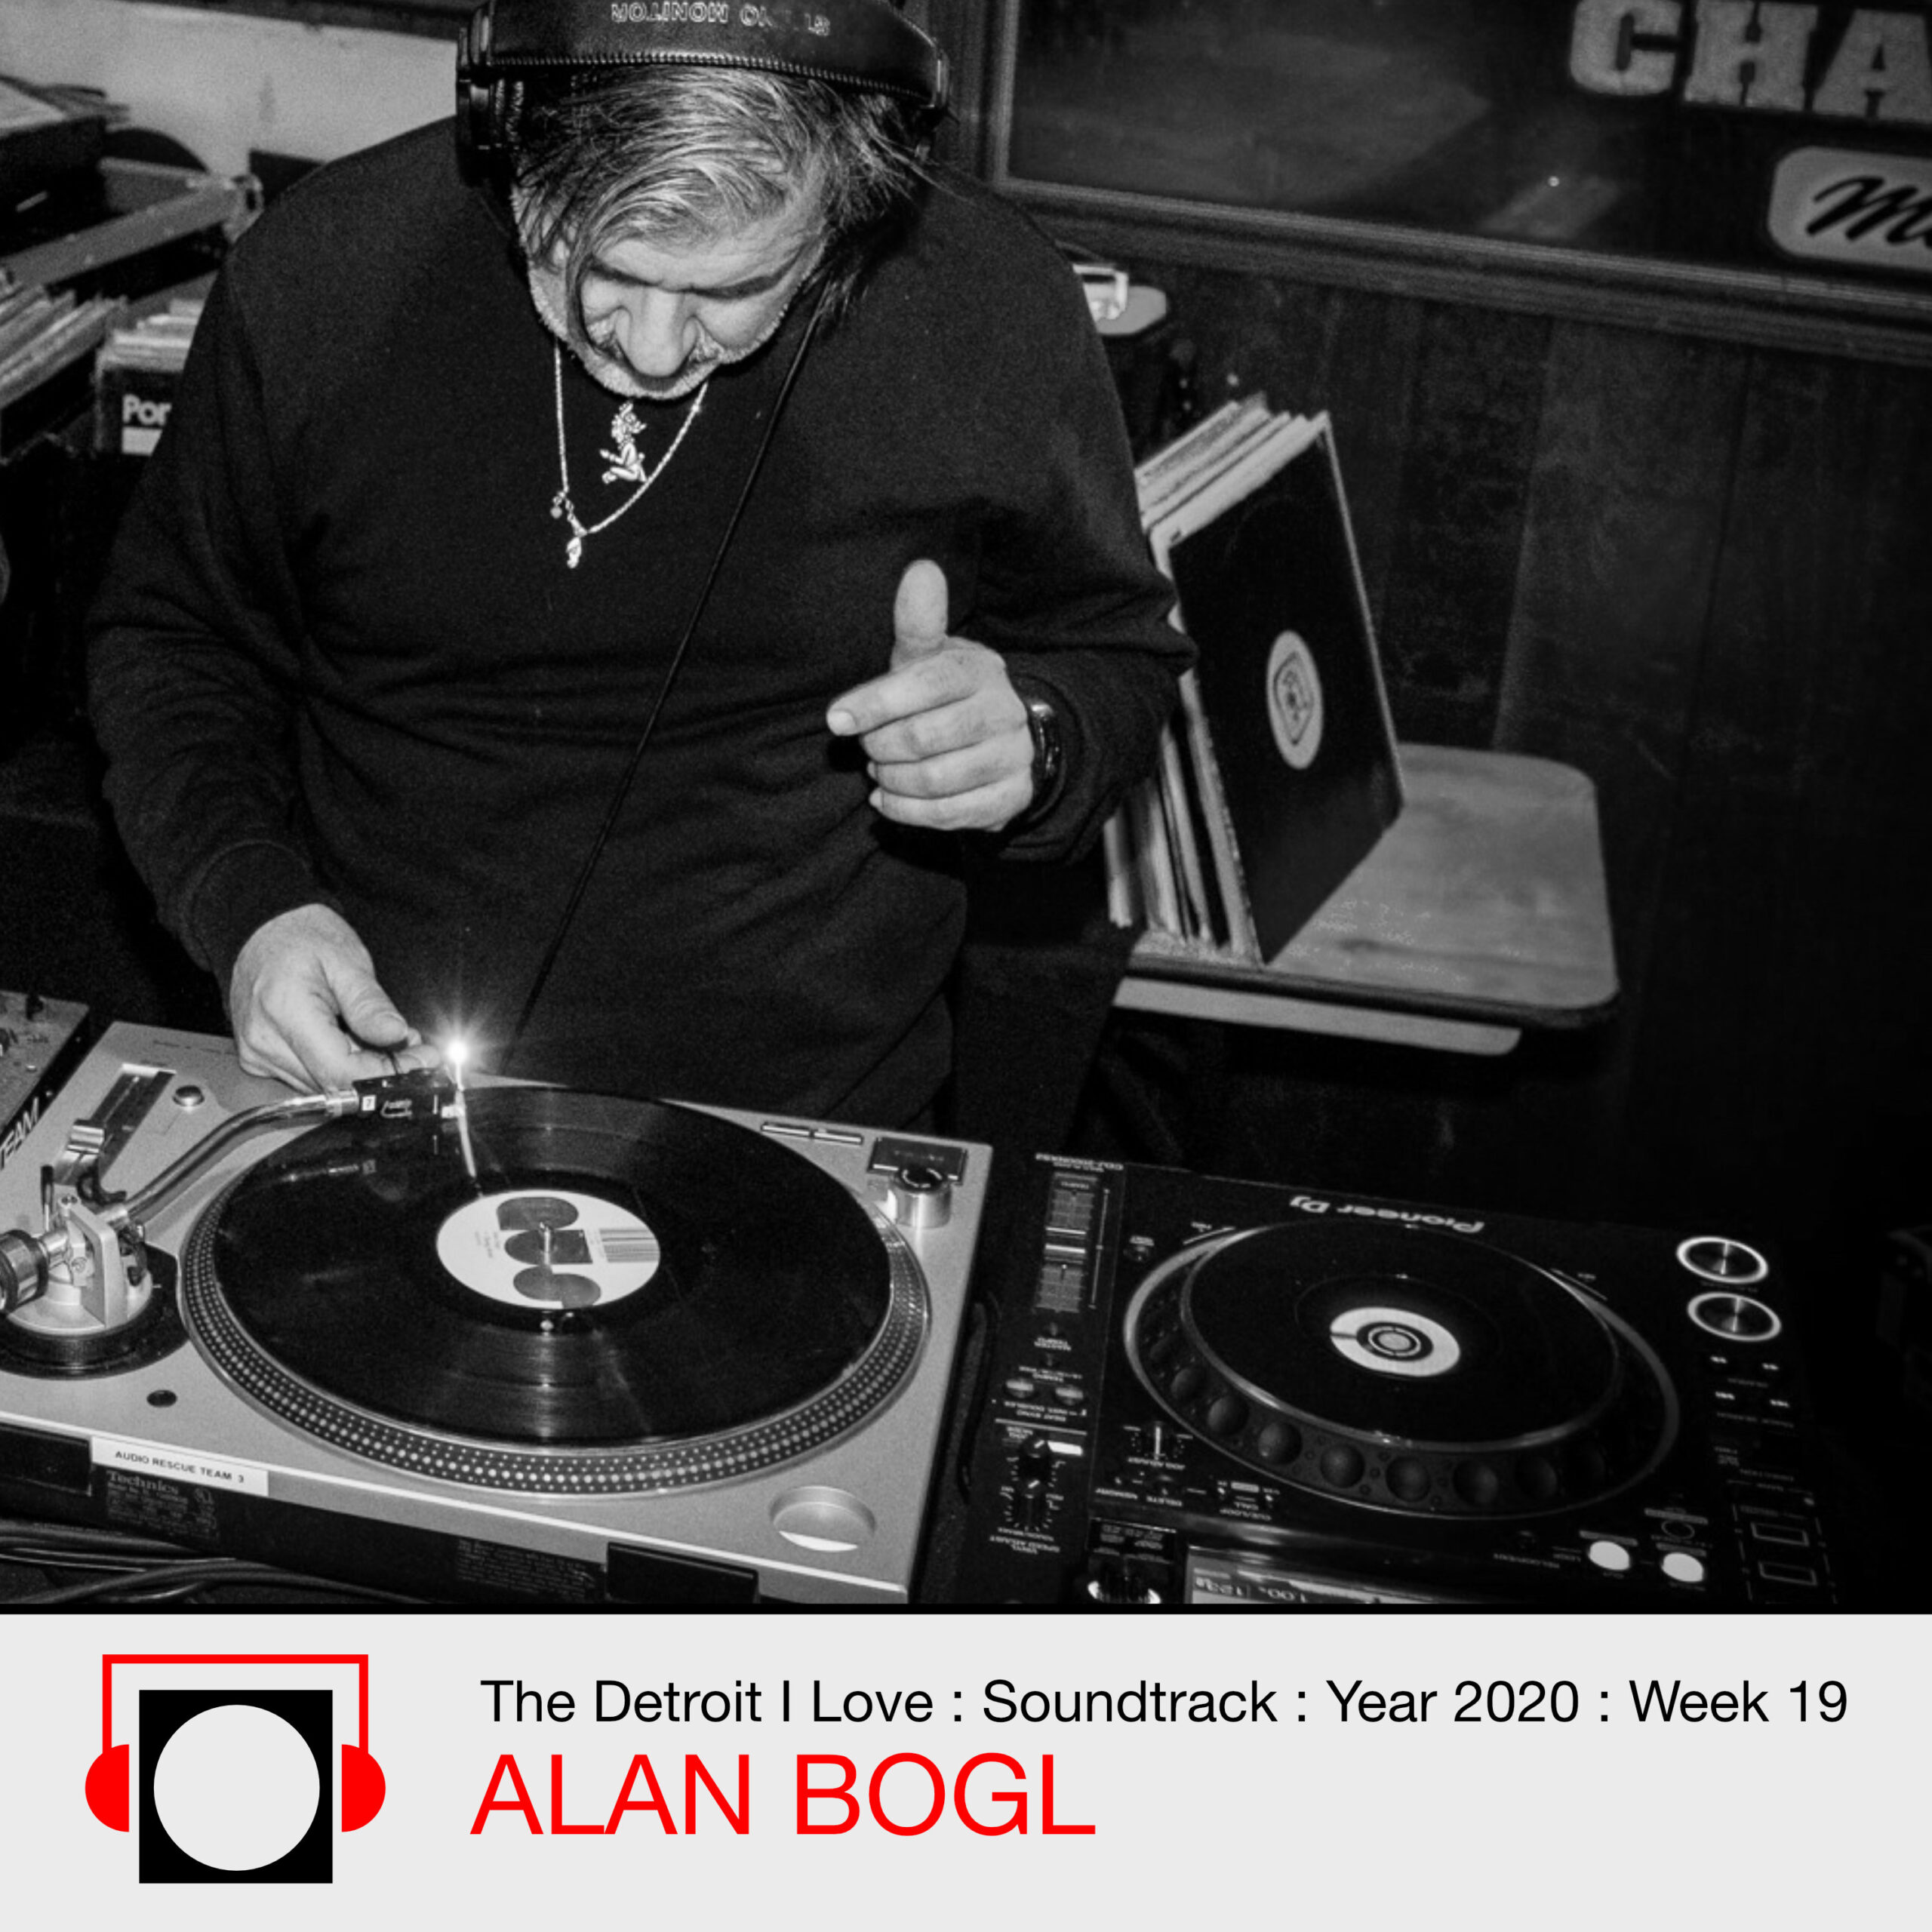 Alan Bogl